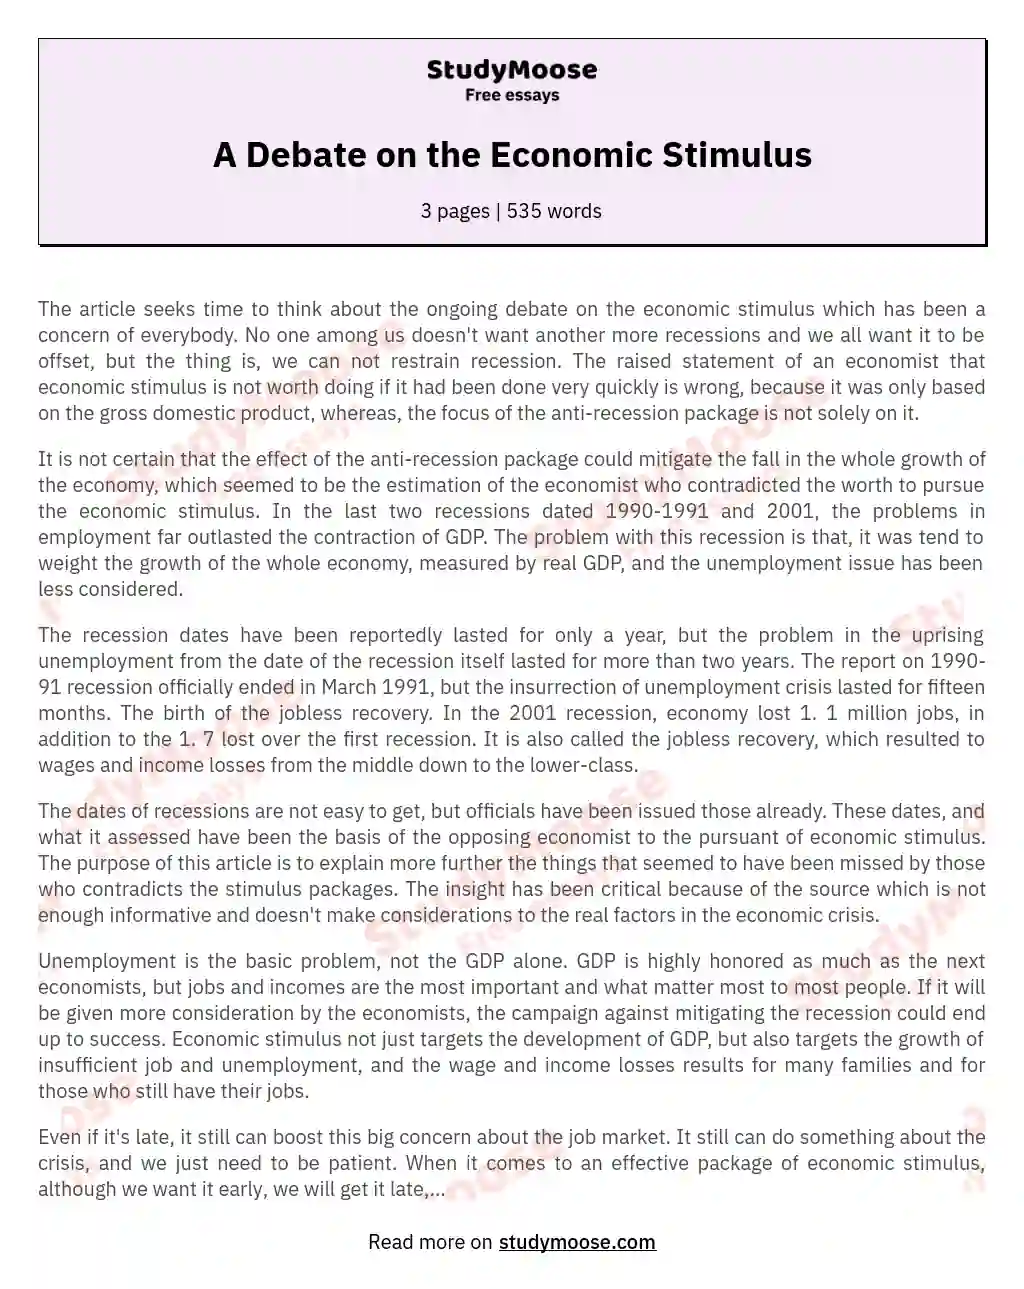 A Debate on the Economic Stimulus essay